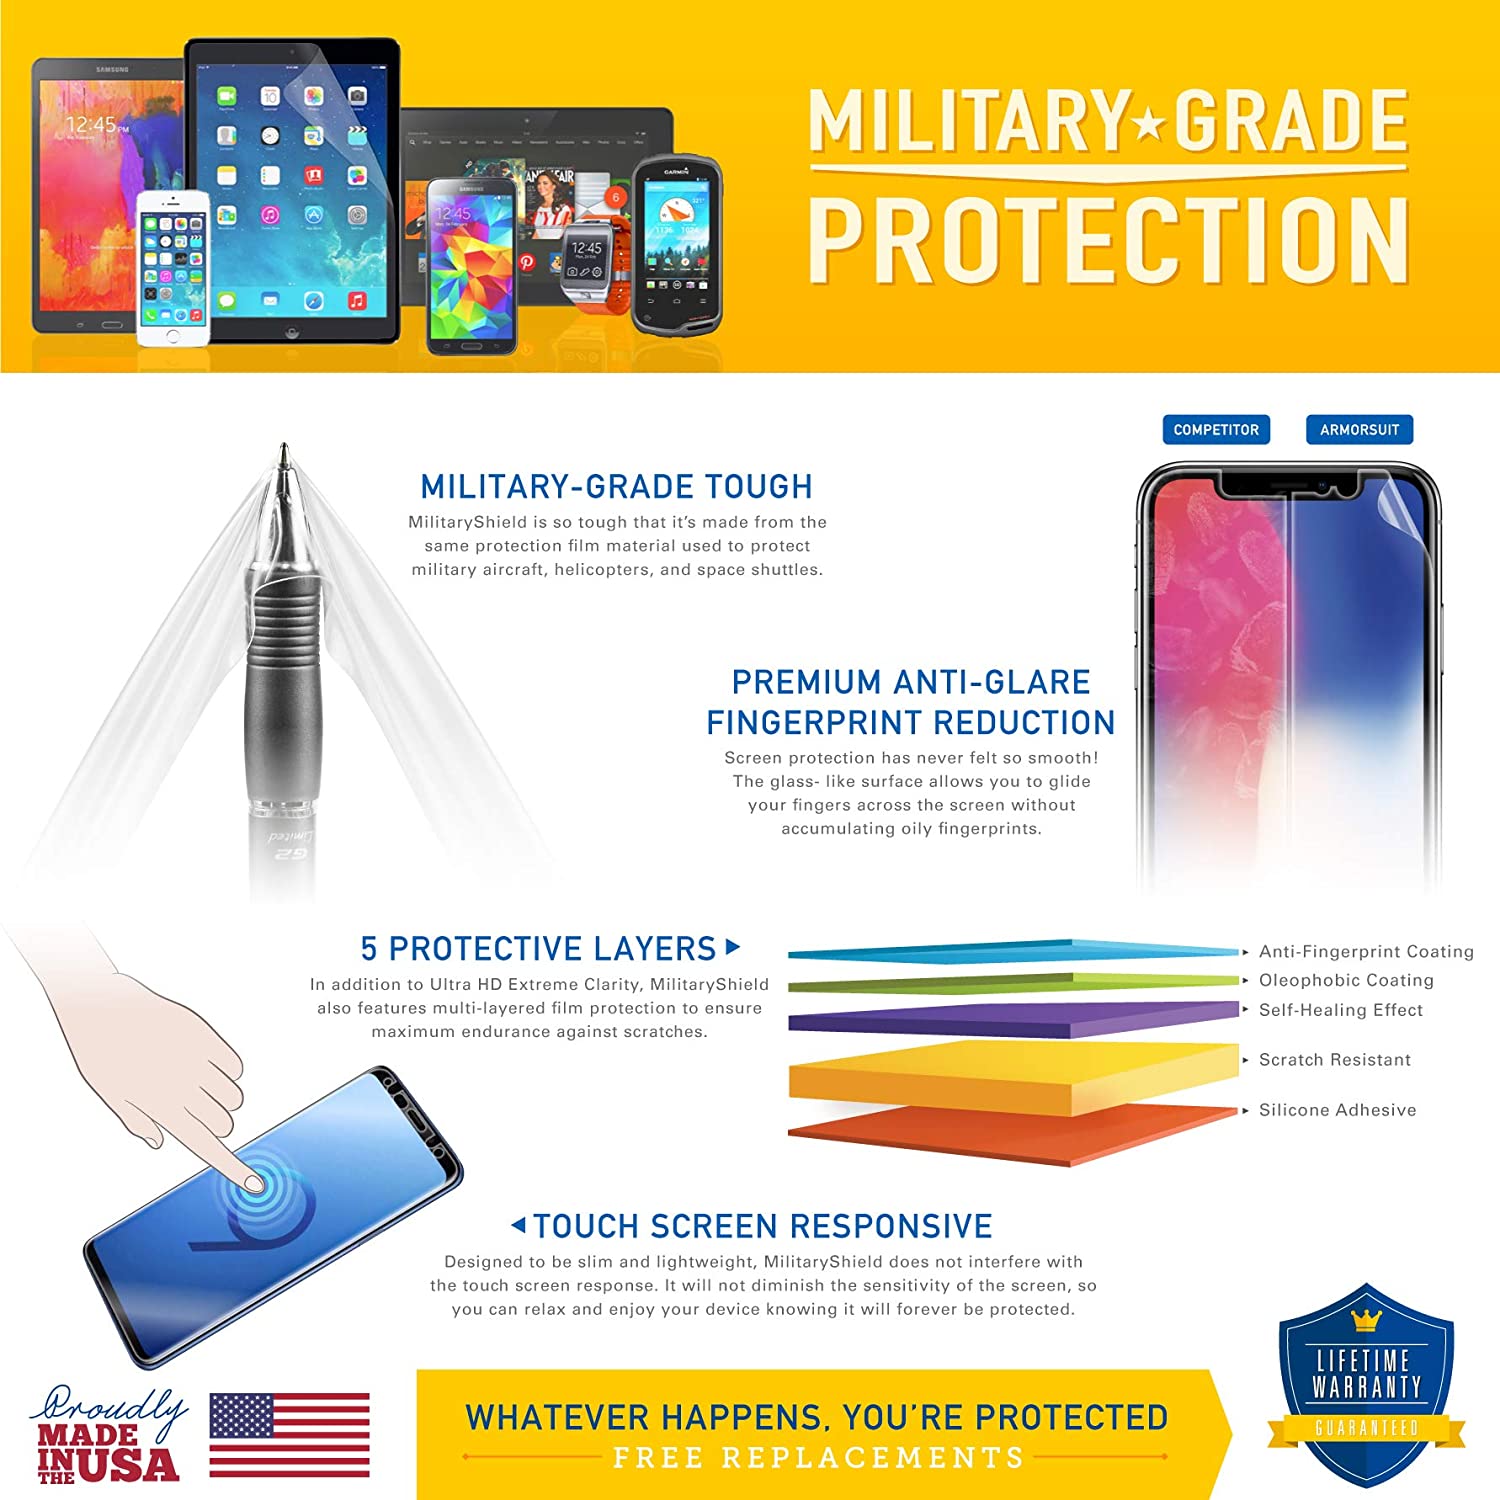 Samsung Galaxy Note 4 Full Body Skin Protector